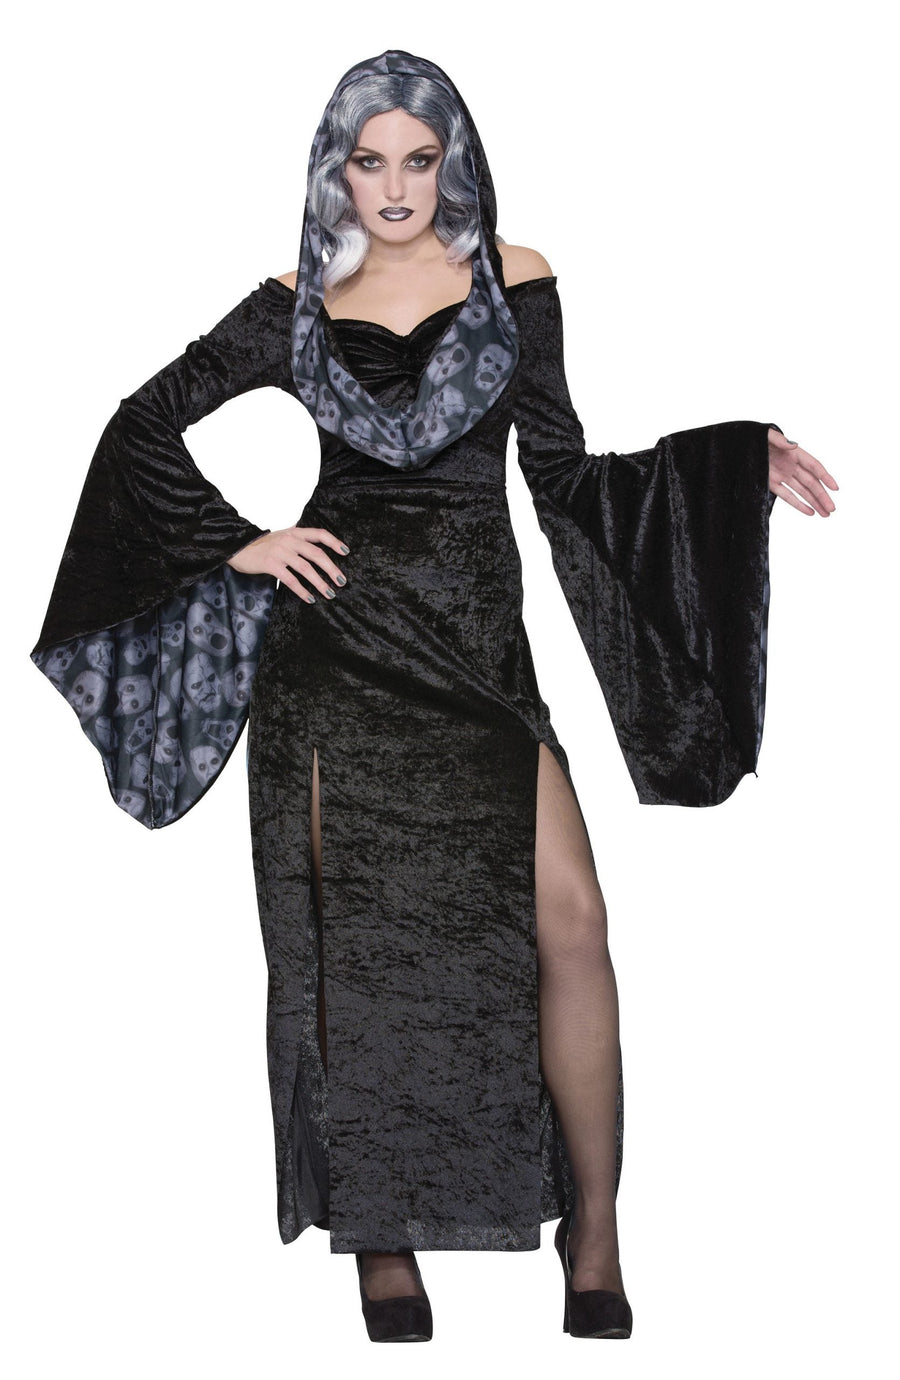 Spirited Black Widow Dress Adult Costume UK Size 10-14_1